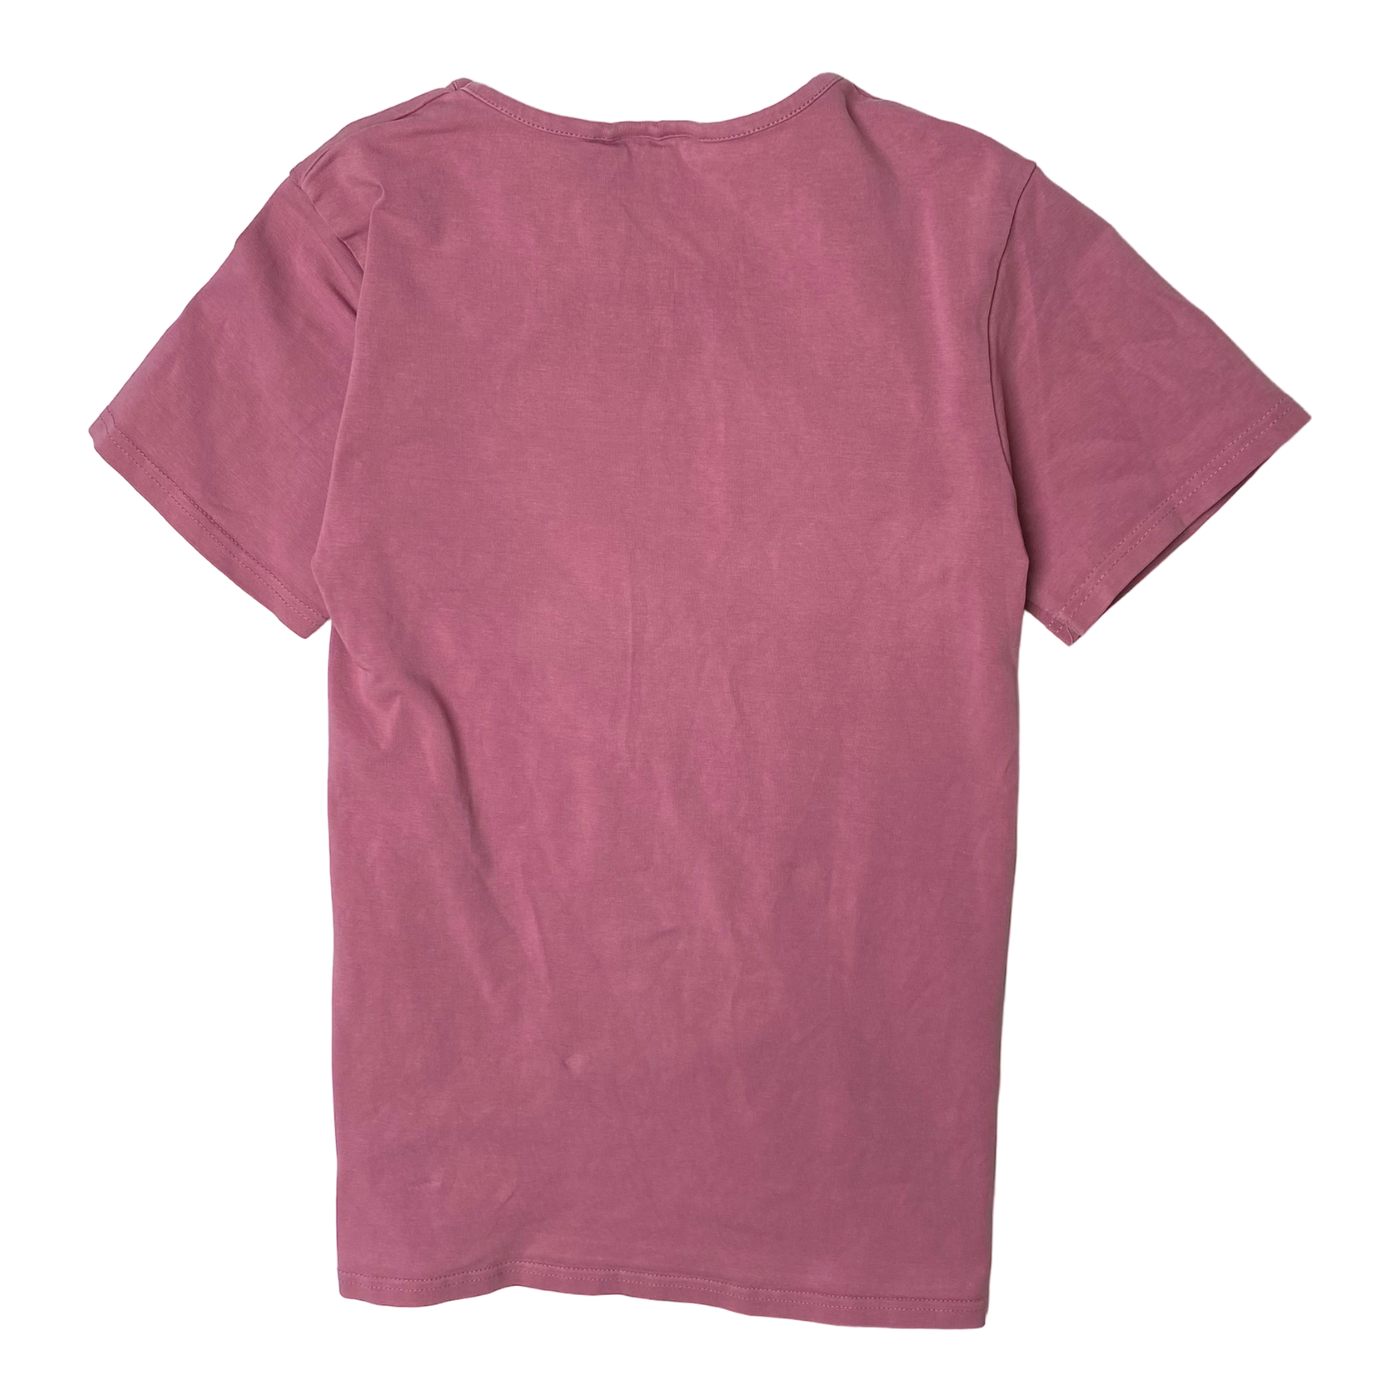 Gugguu t-shirt, salmon pink | 152cm